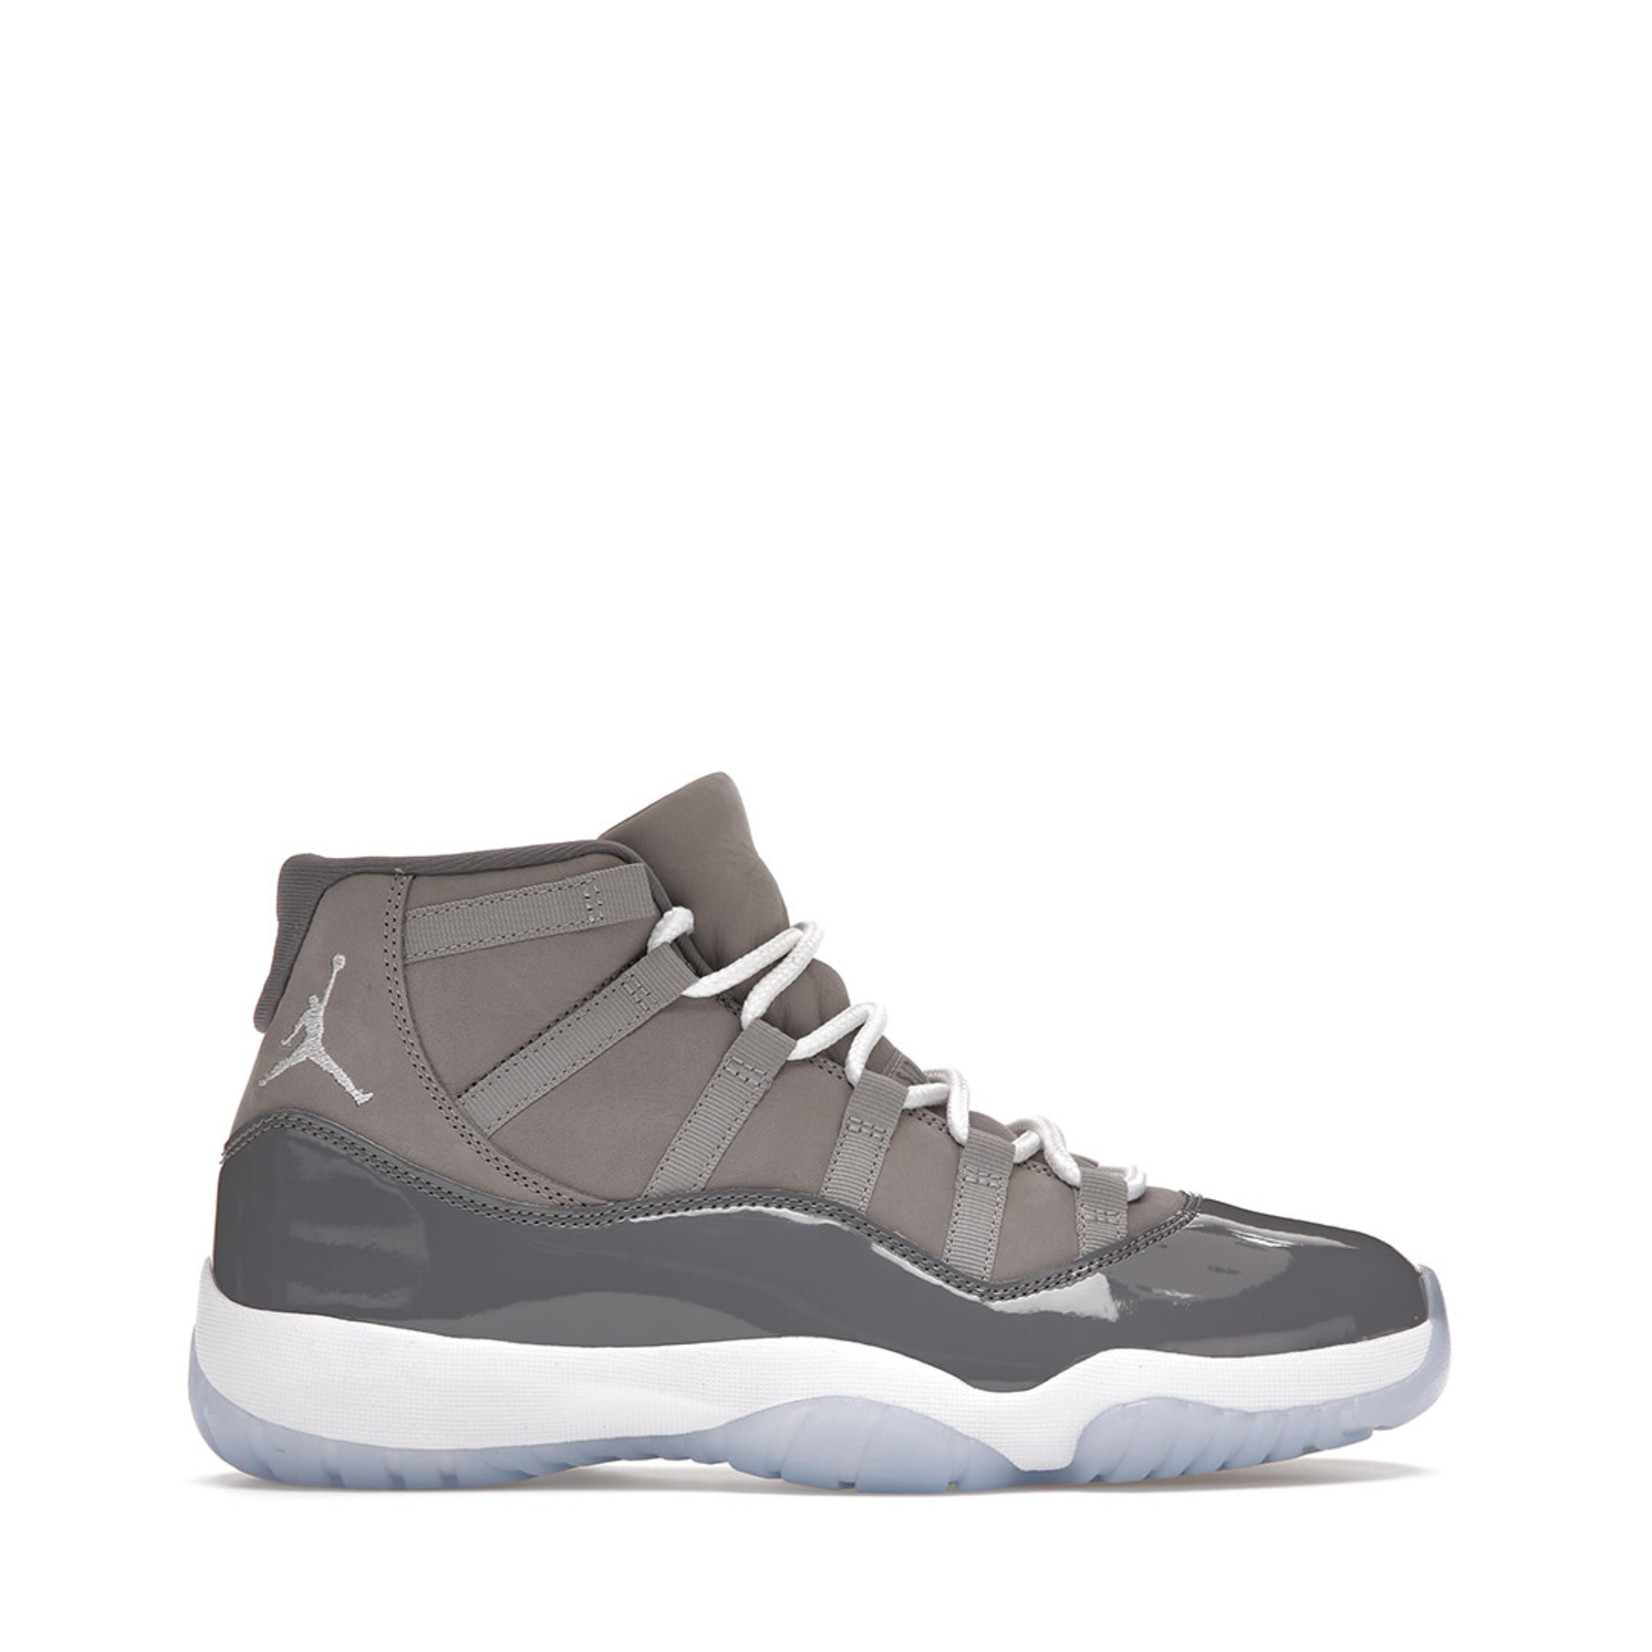 Jordan Jordan 11 Retro Cool Grey (2021)